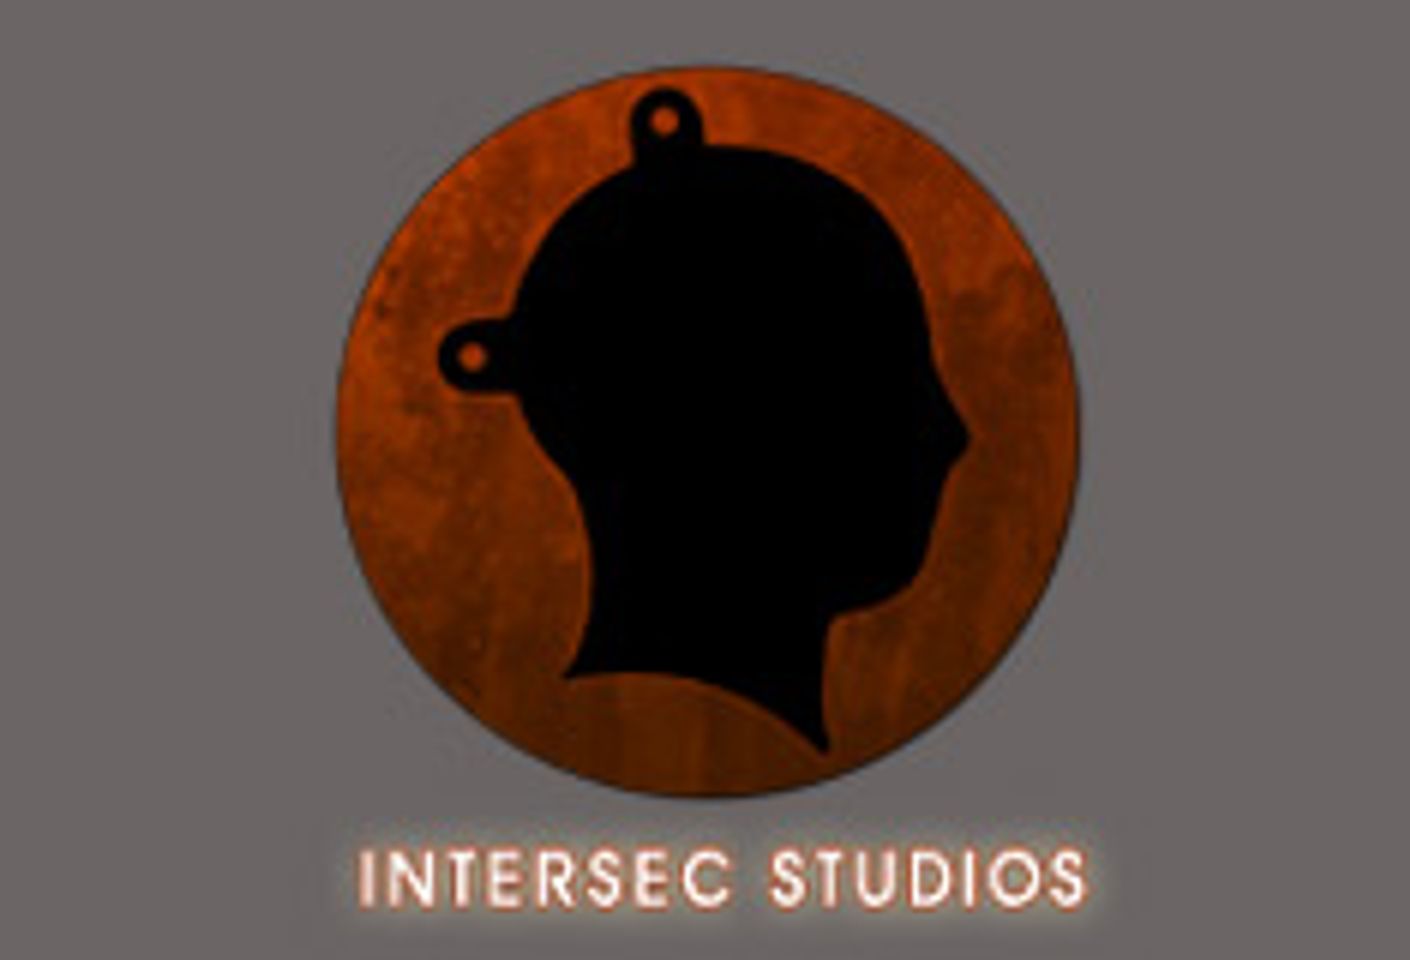 Intersec Studios, SexuallyBroken.com Announce Feature Series